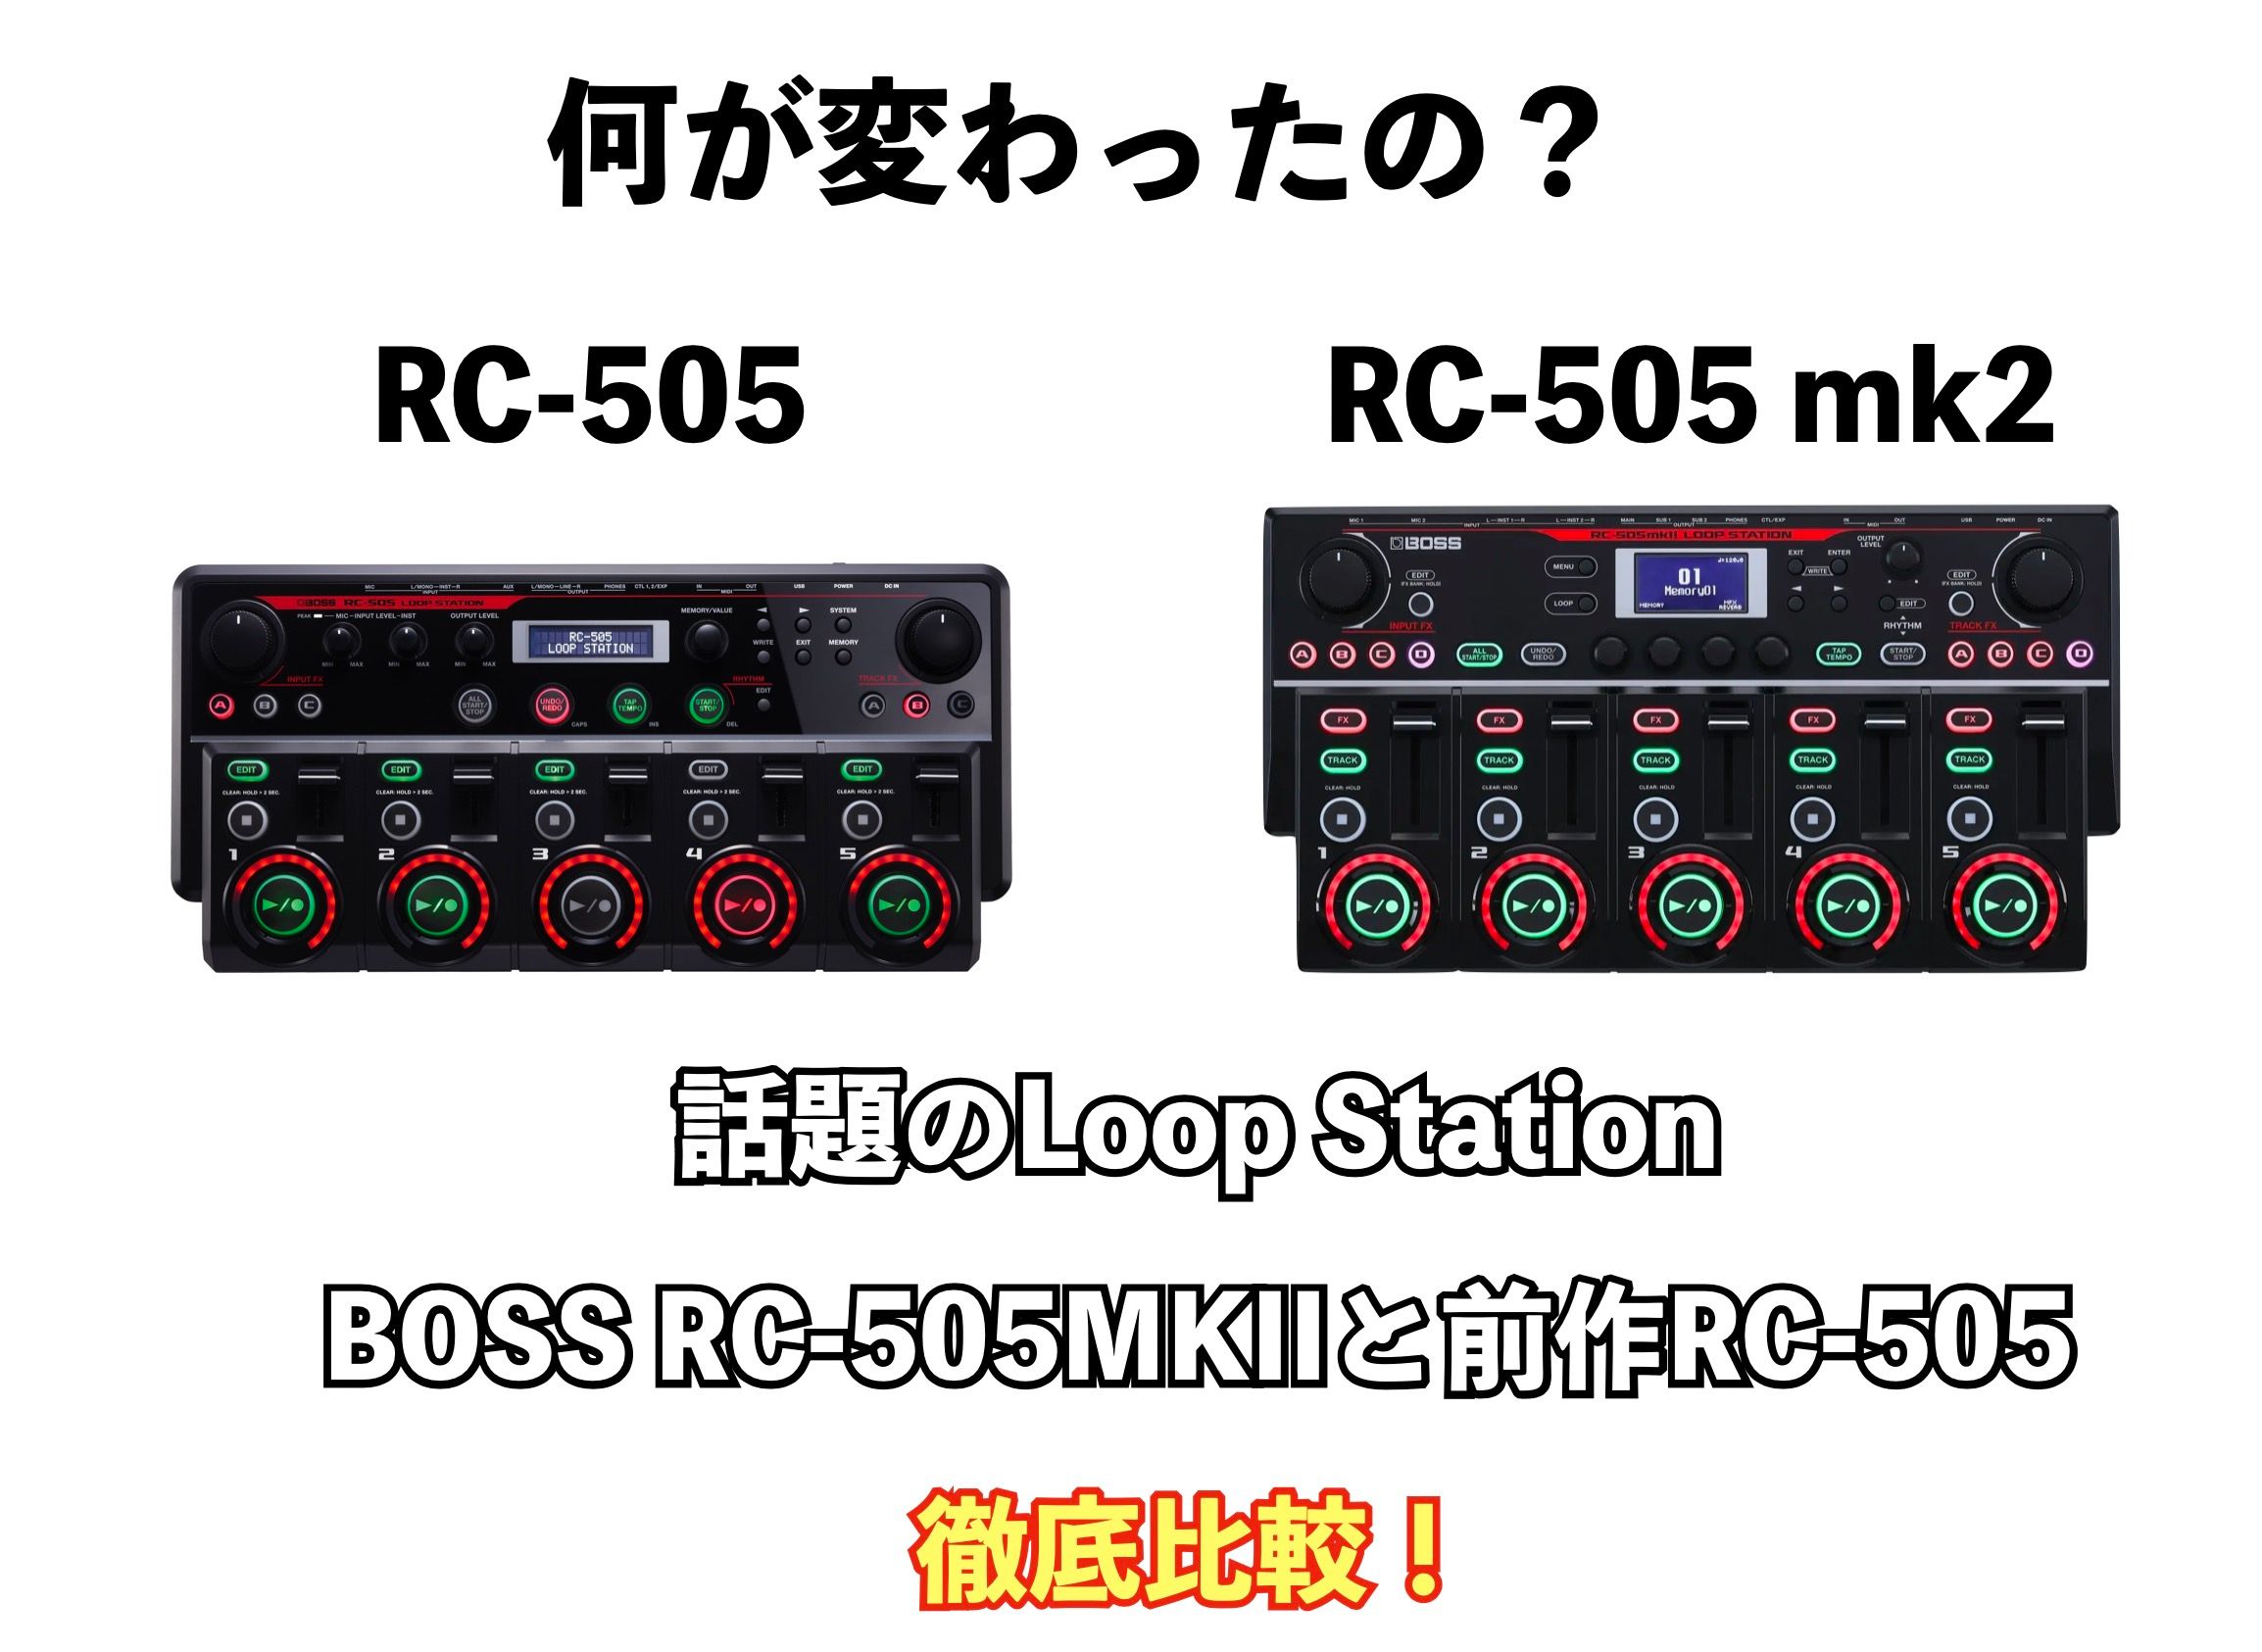 Boss RC-505 mk2 LoopStation